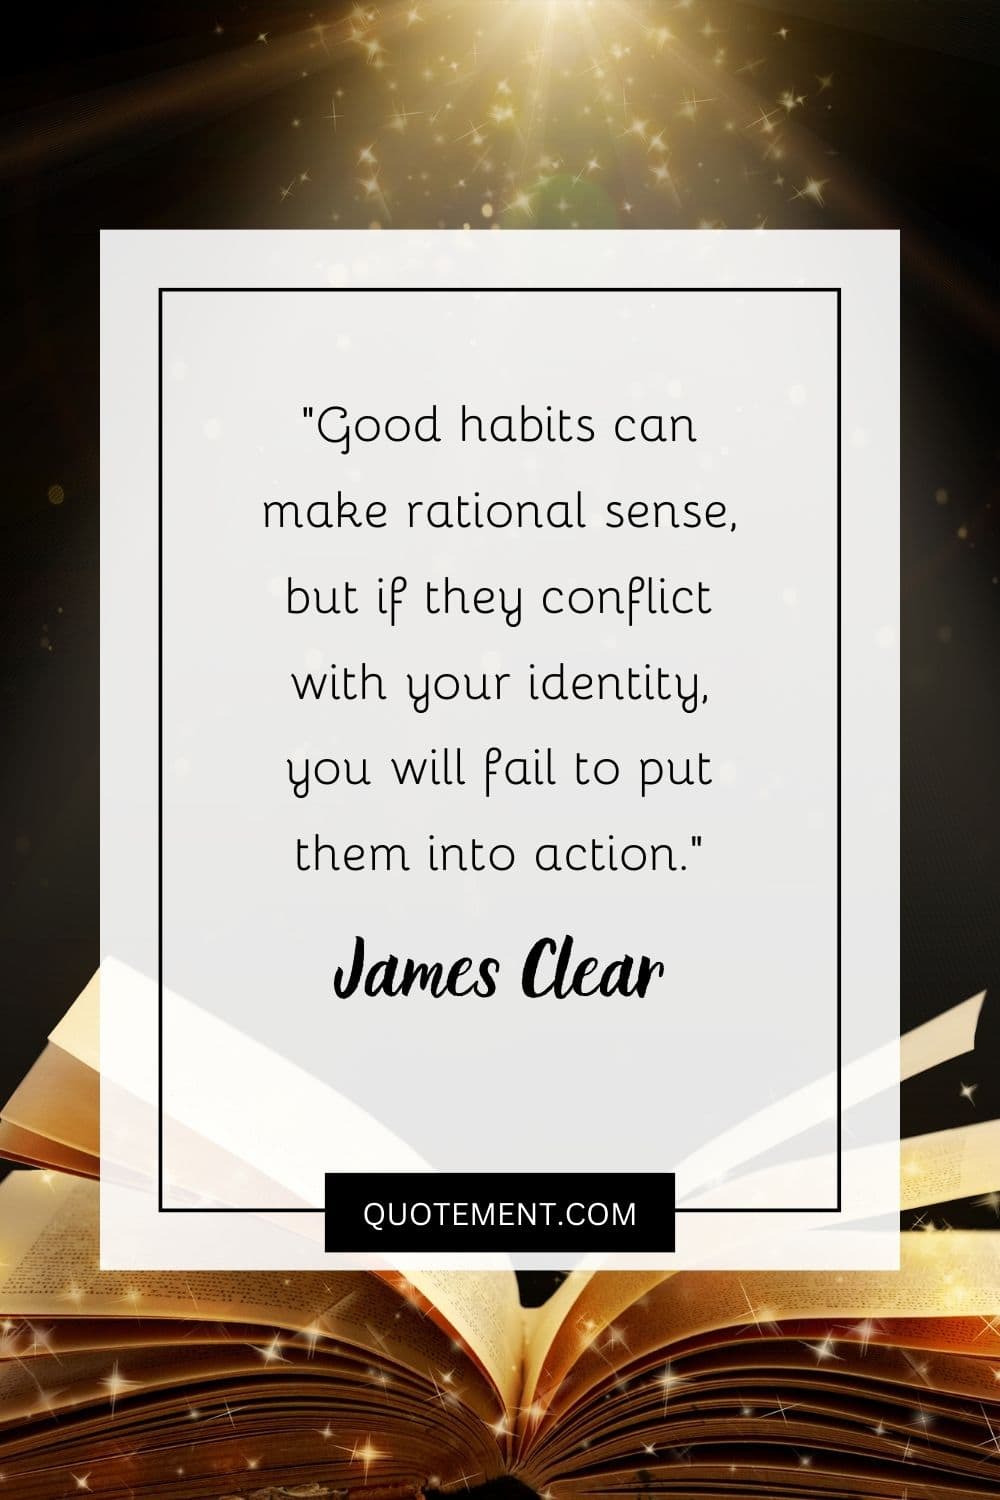 Good habits can make rational sense